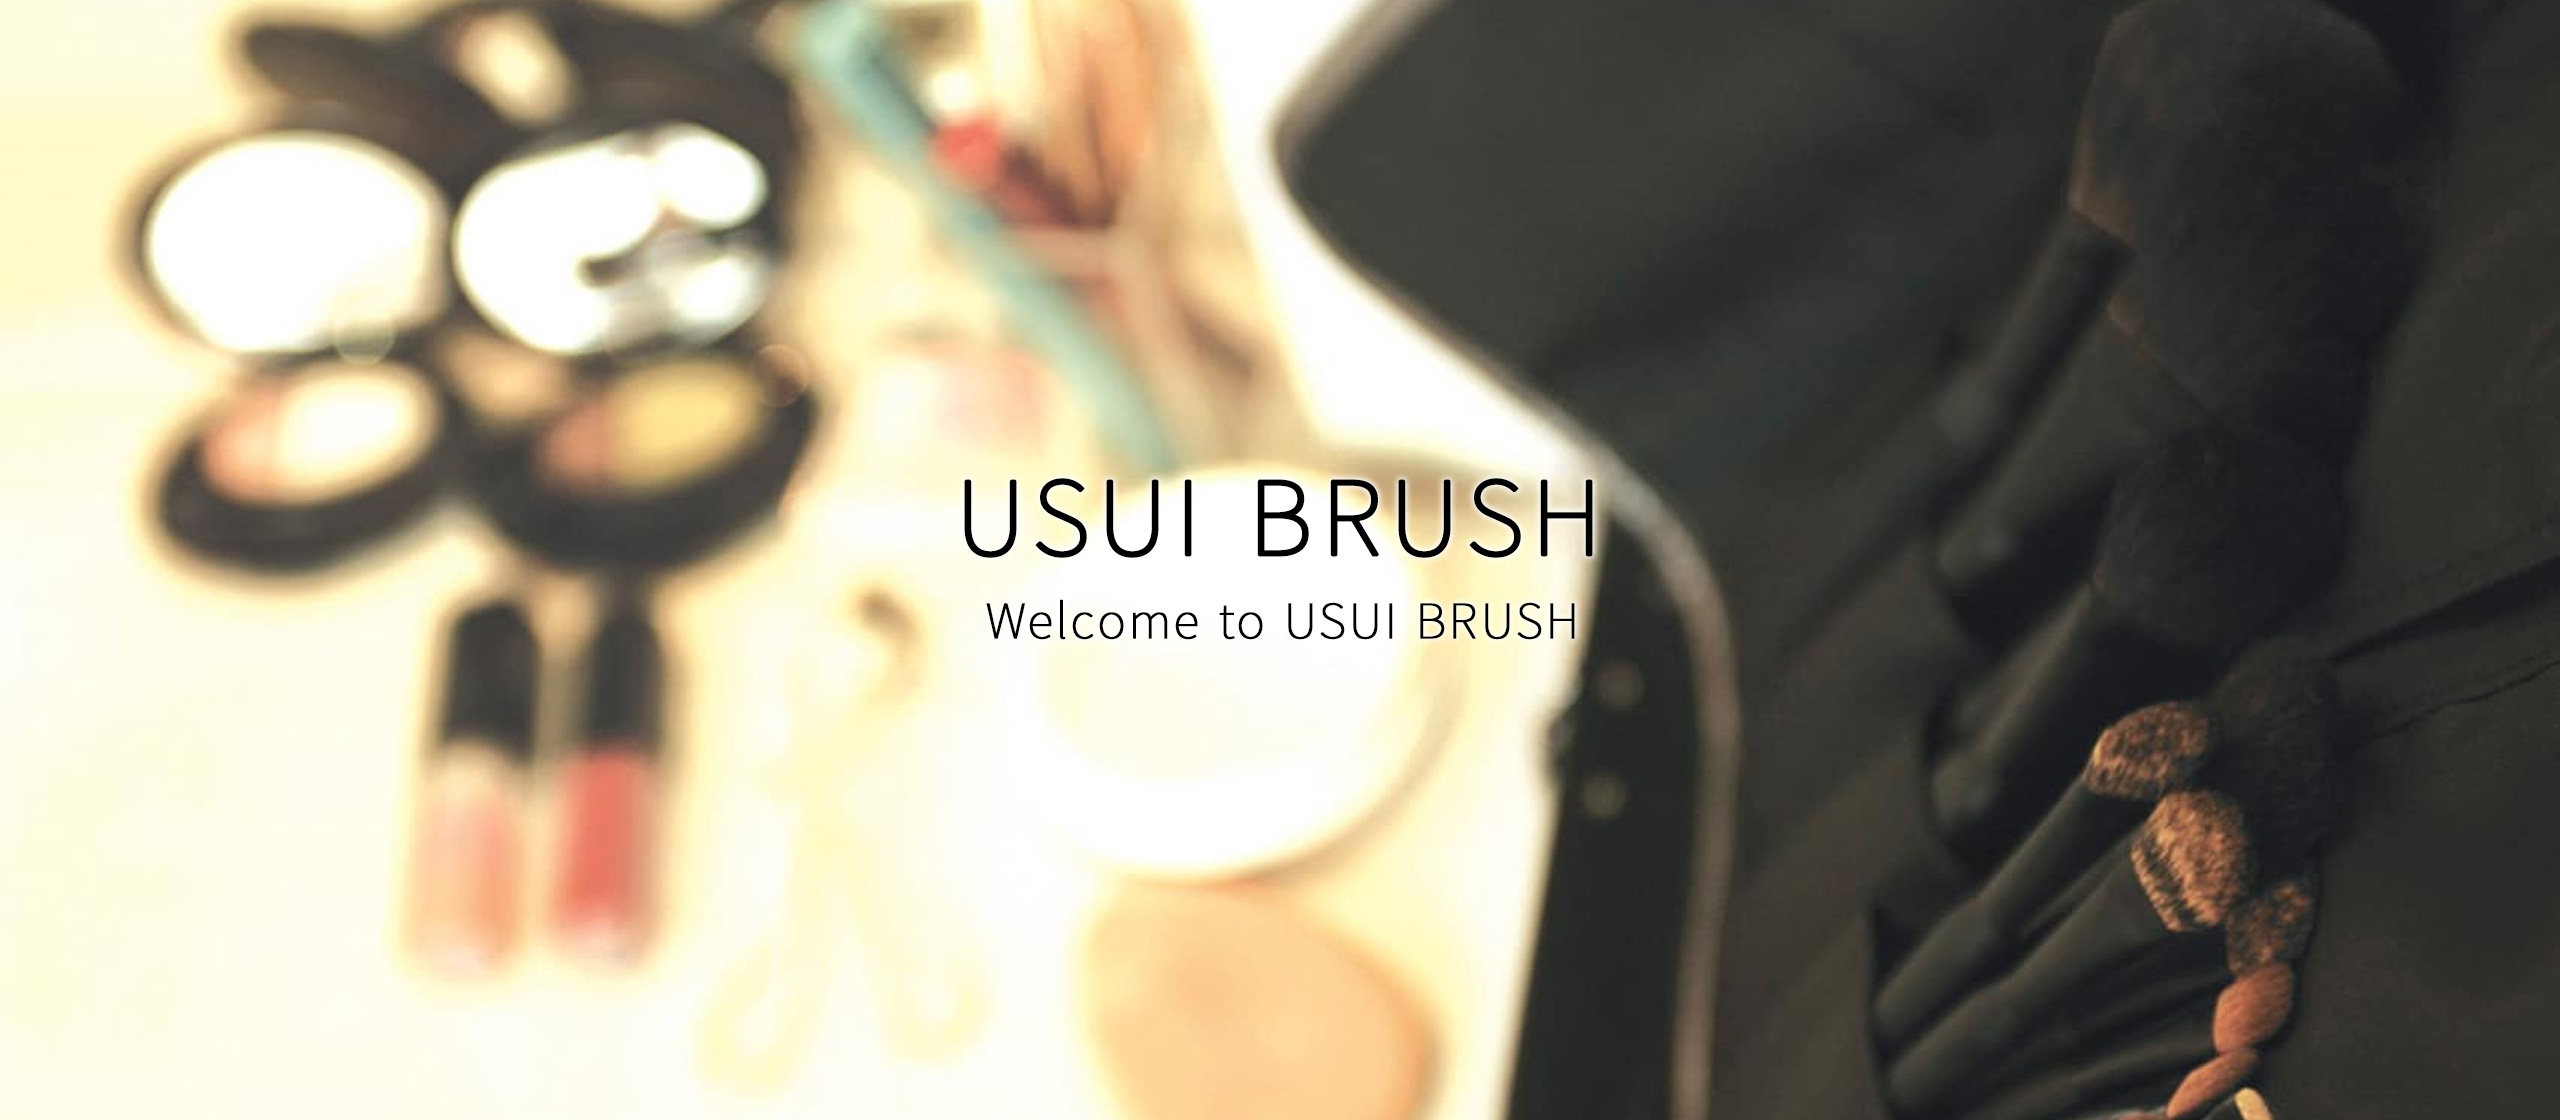 USUI BRUSH -Welcome to USUI BRUSH-